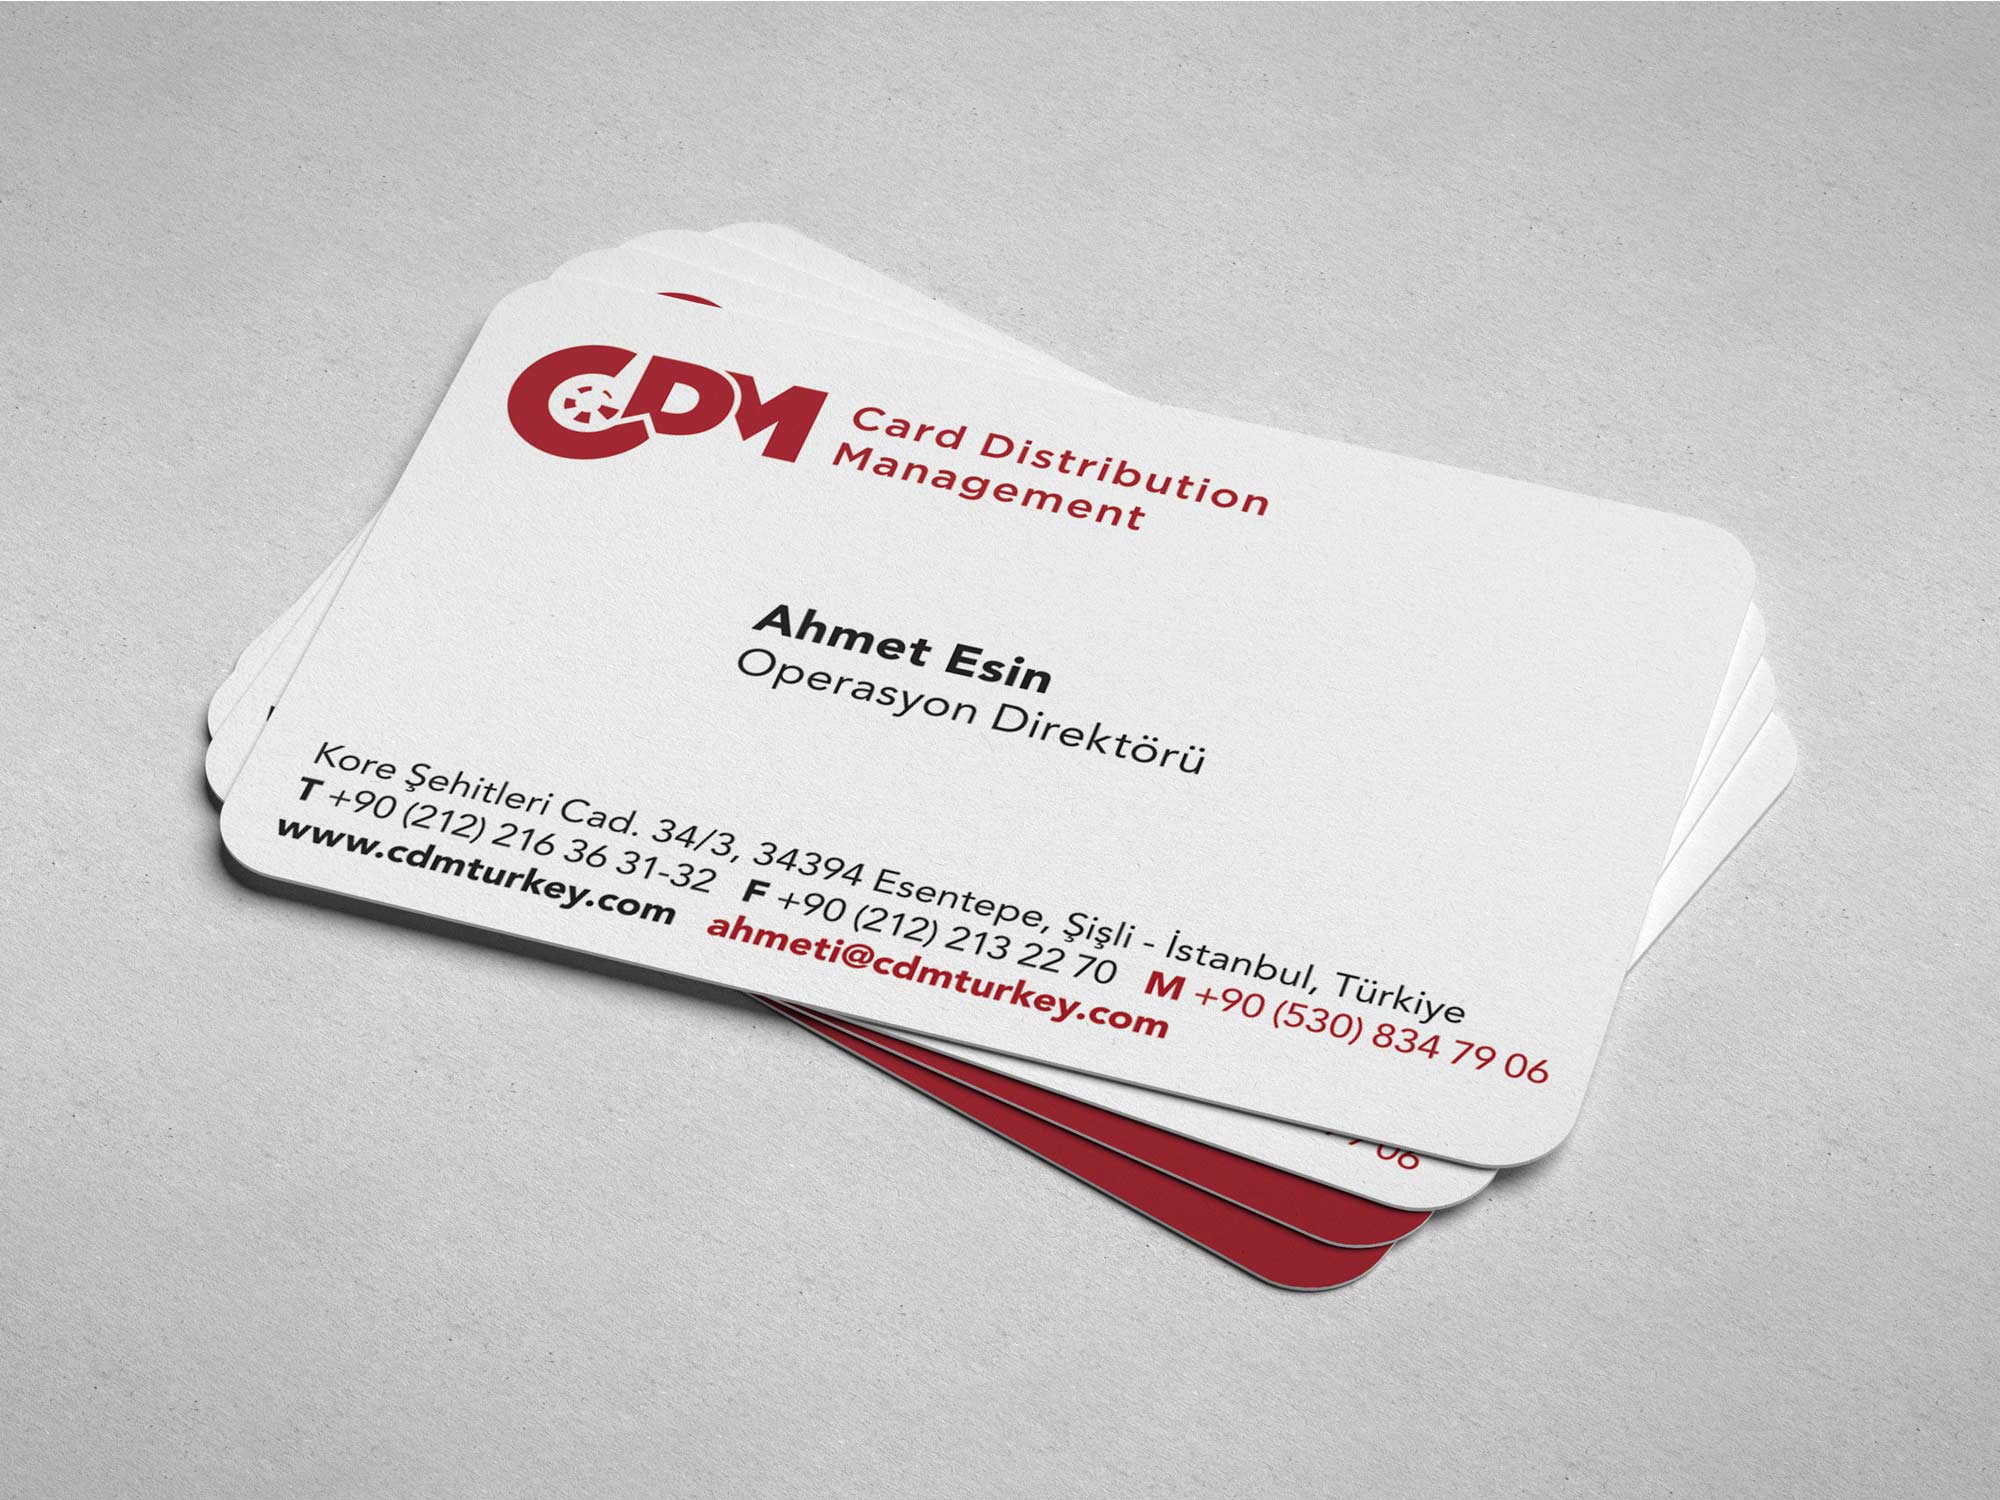 Branding Card Distribution Management Businesscard